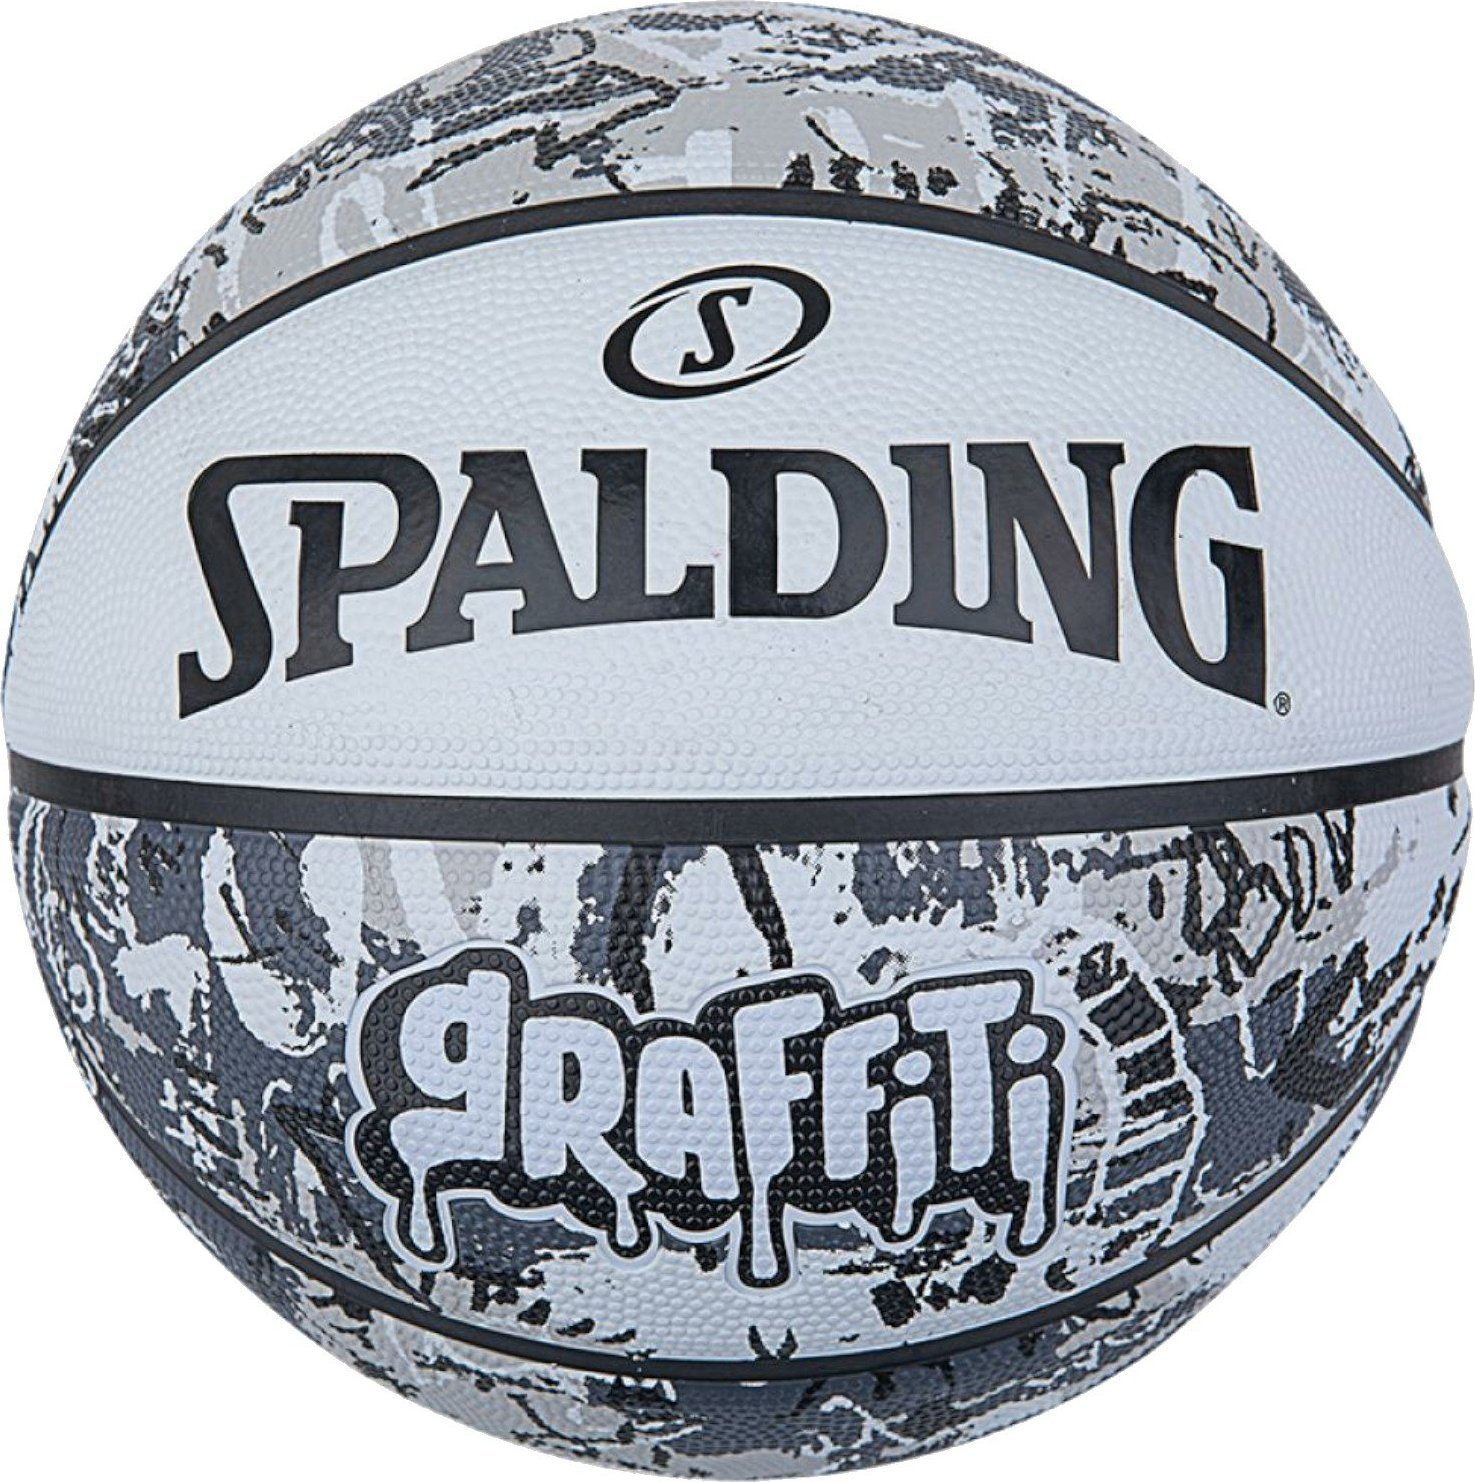 Spalding Spalding Graffiti Ball 84375Z gri 7